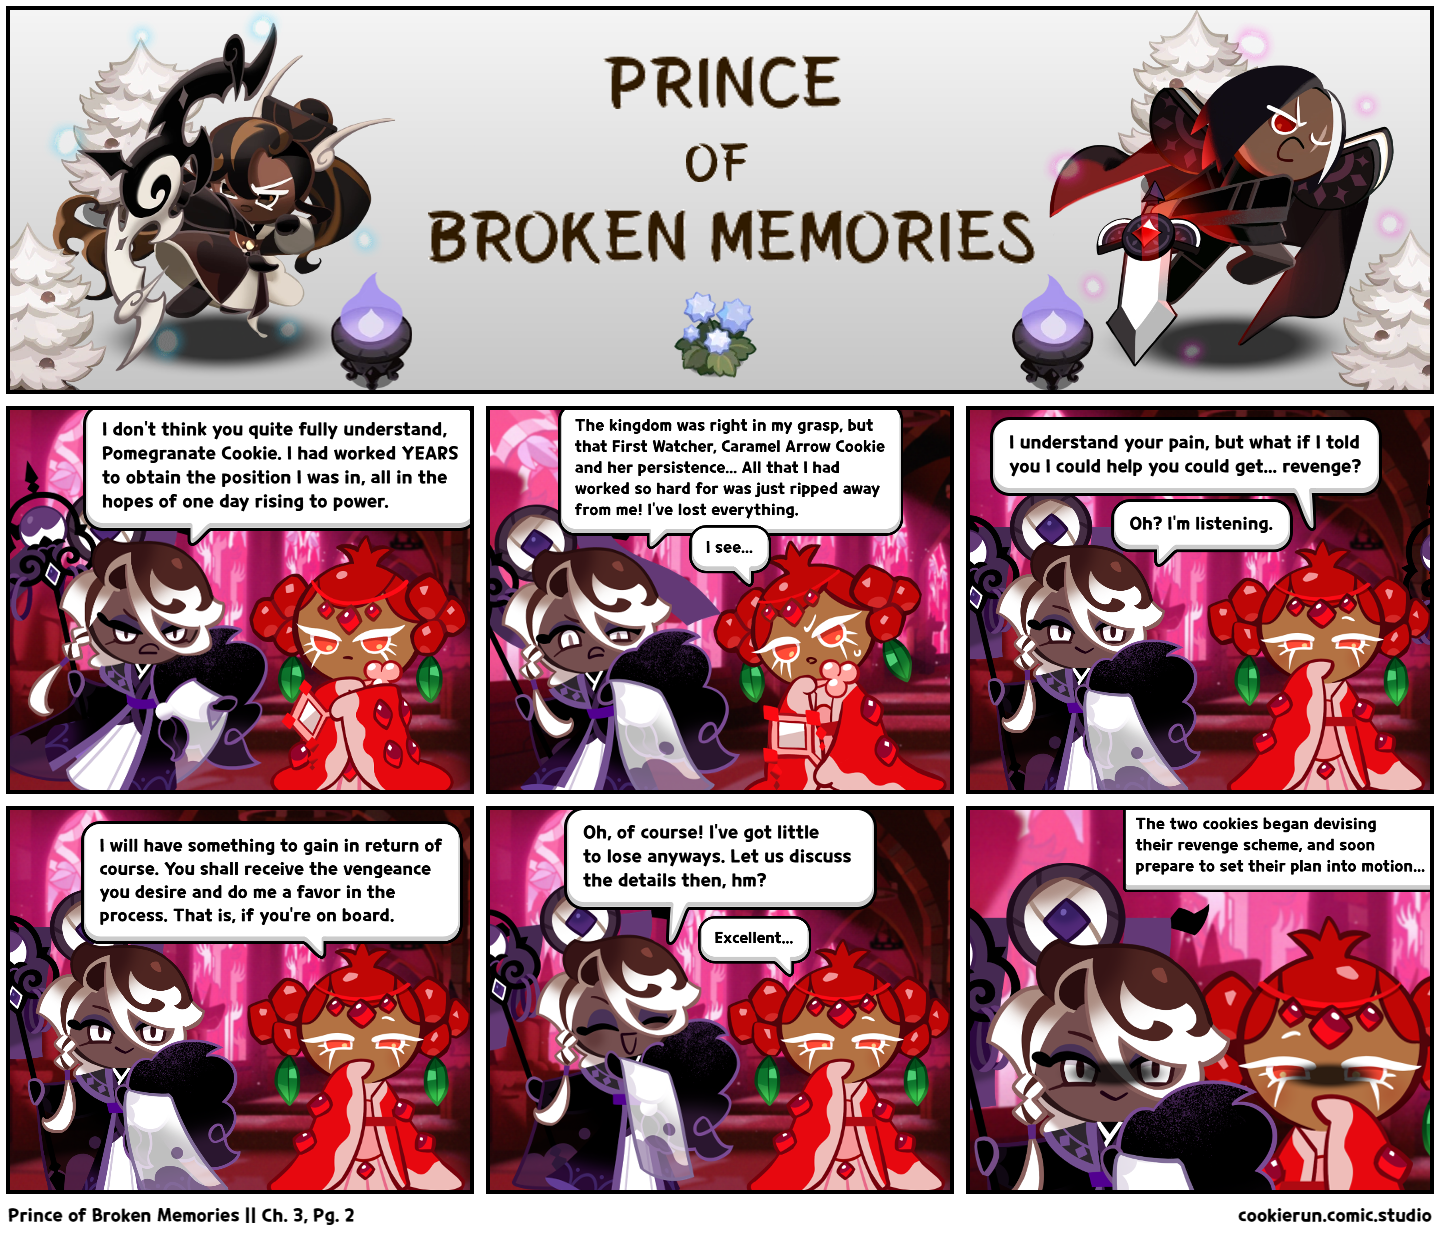 Prince of Broken Memories || Ch. 3, Pg. 2